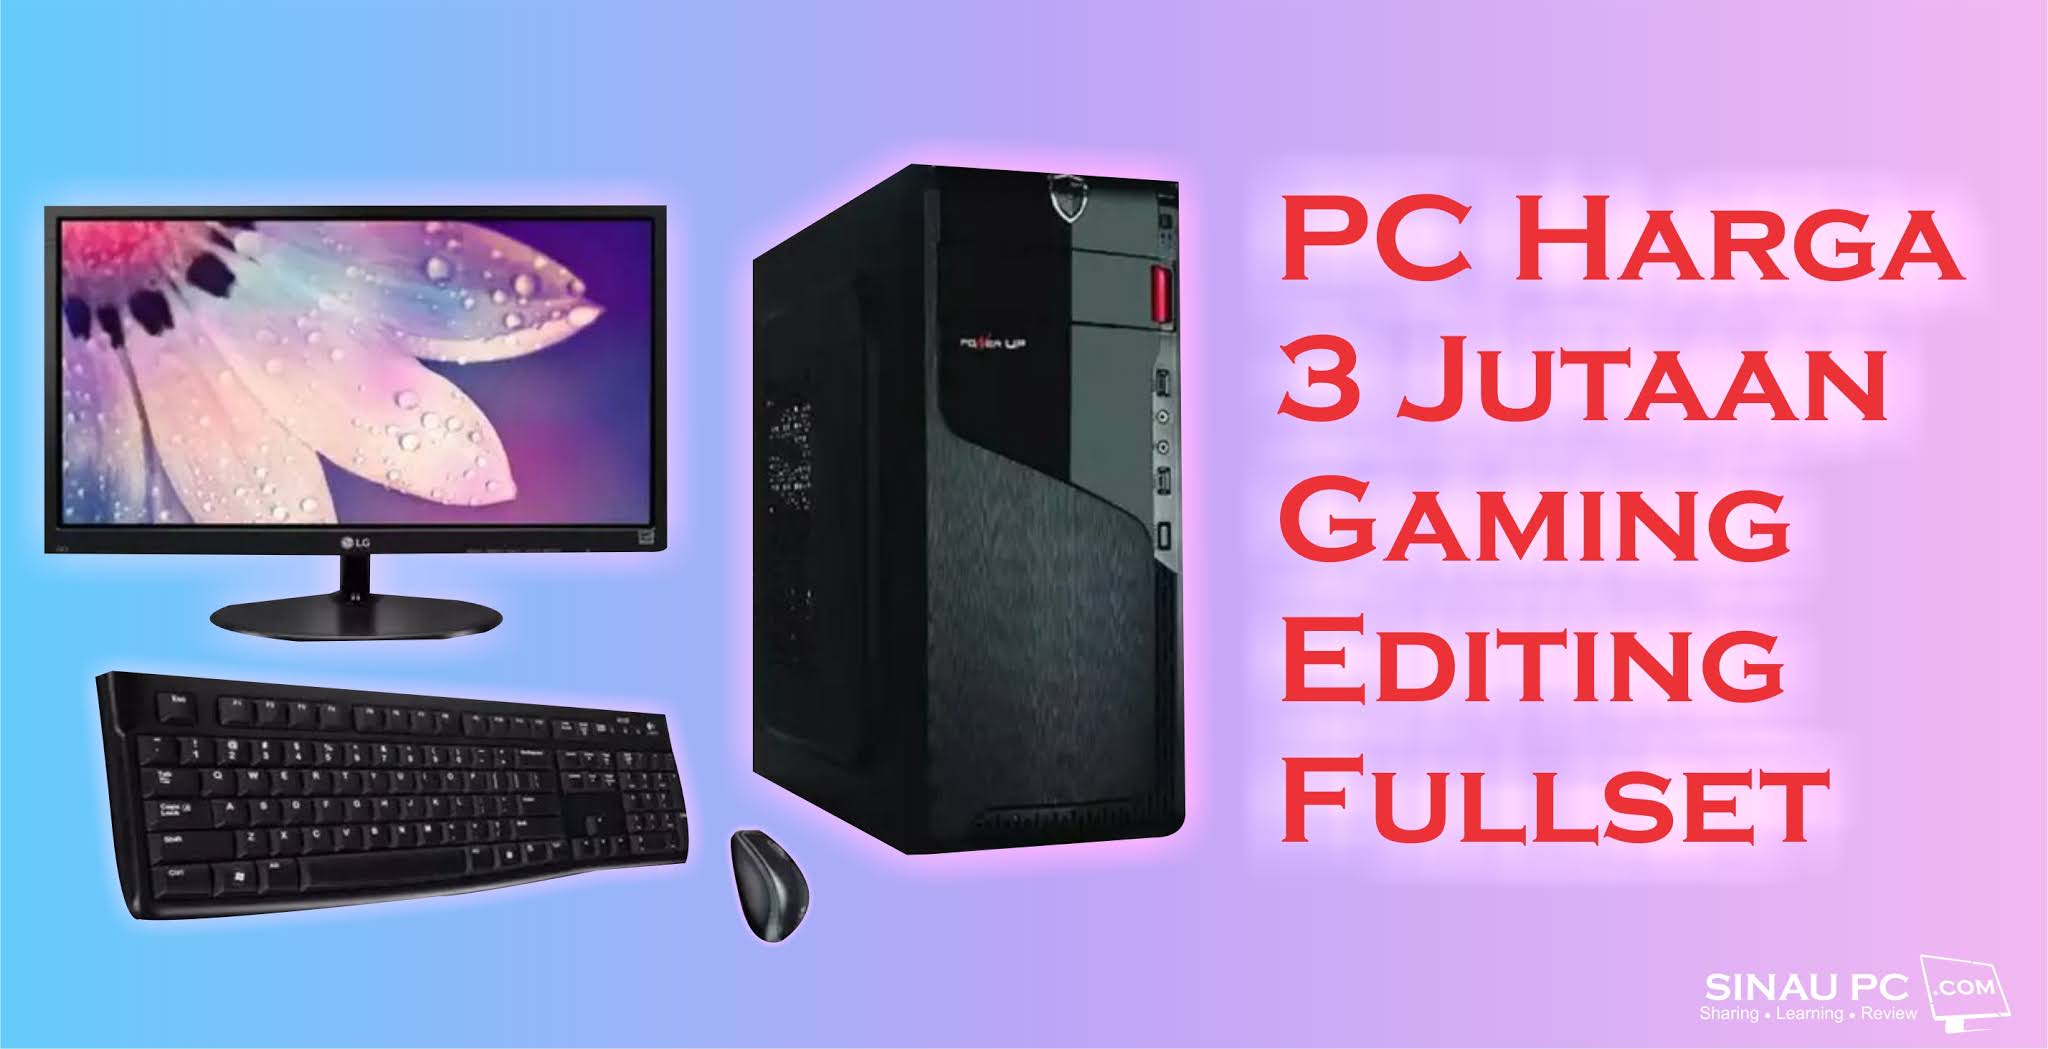 PC Harga 3 Jutaan Gaming Editing Fullset